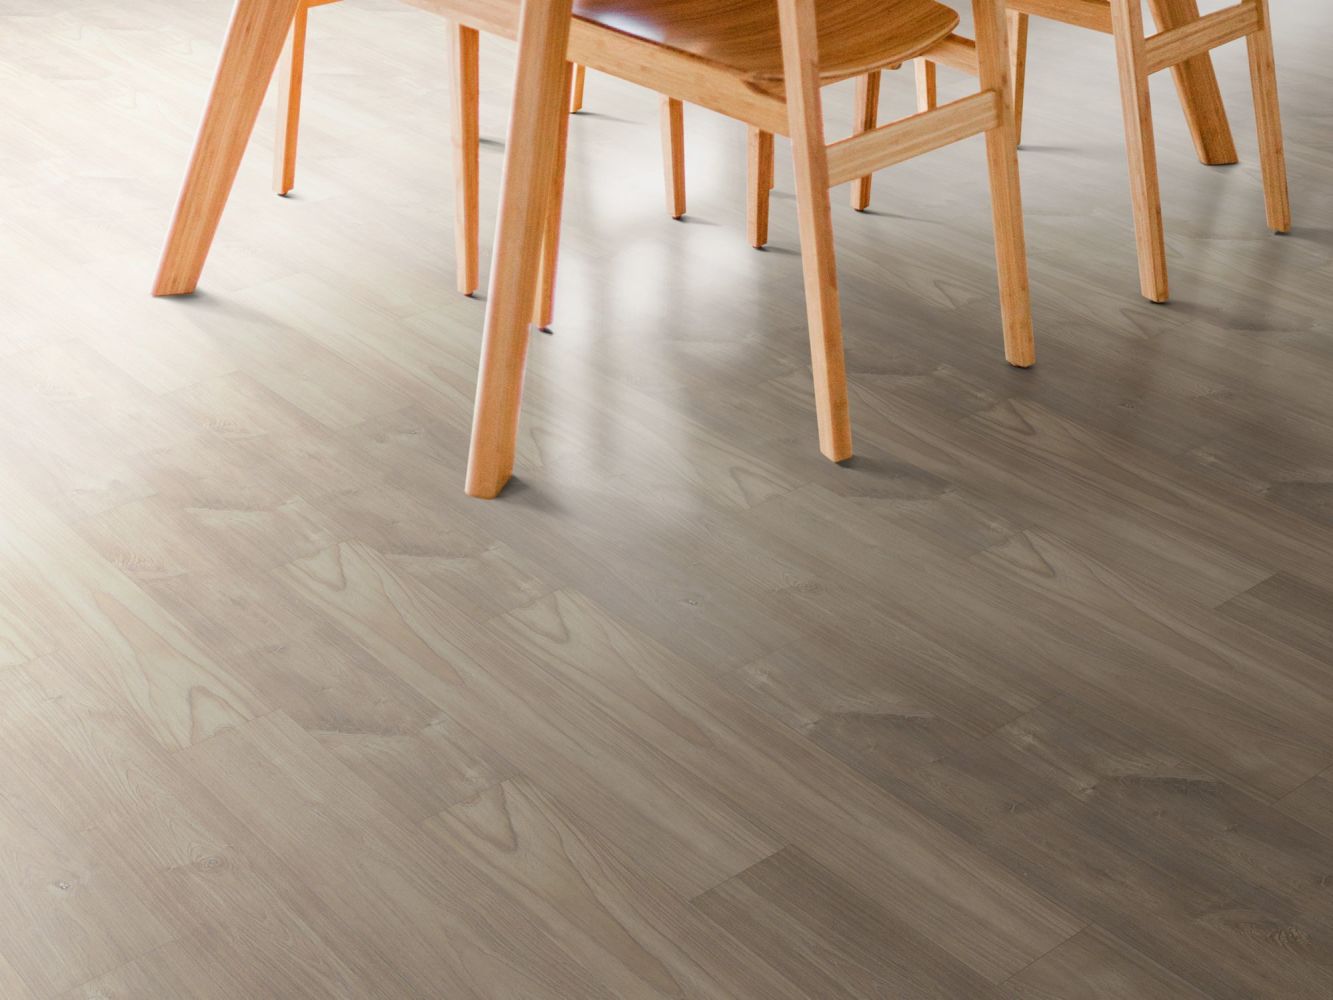 Shaw Floors Versalock Laminate Rarity Chiseled Oak 07723_HL448